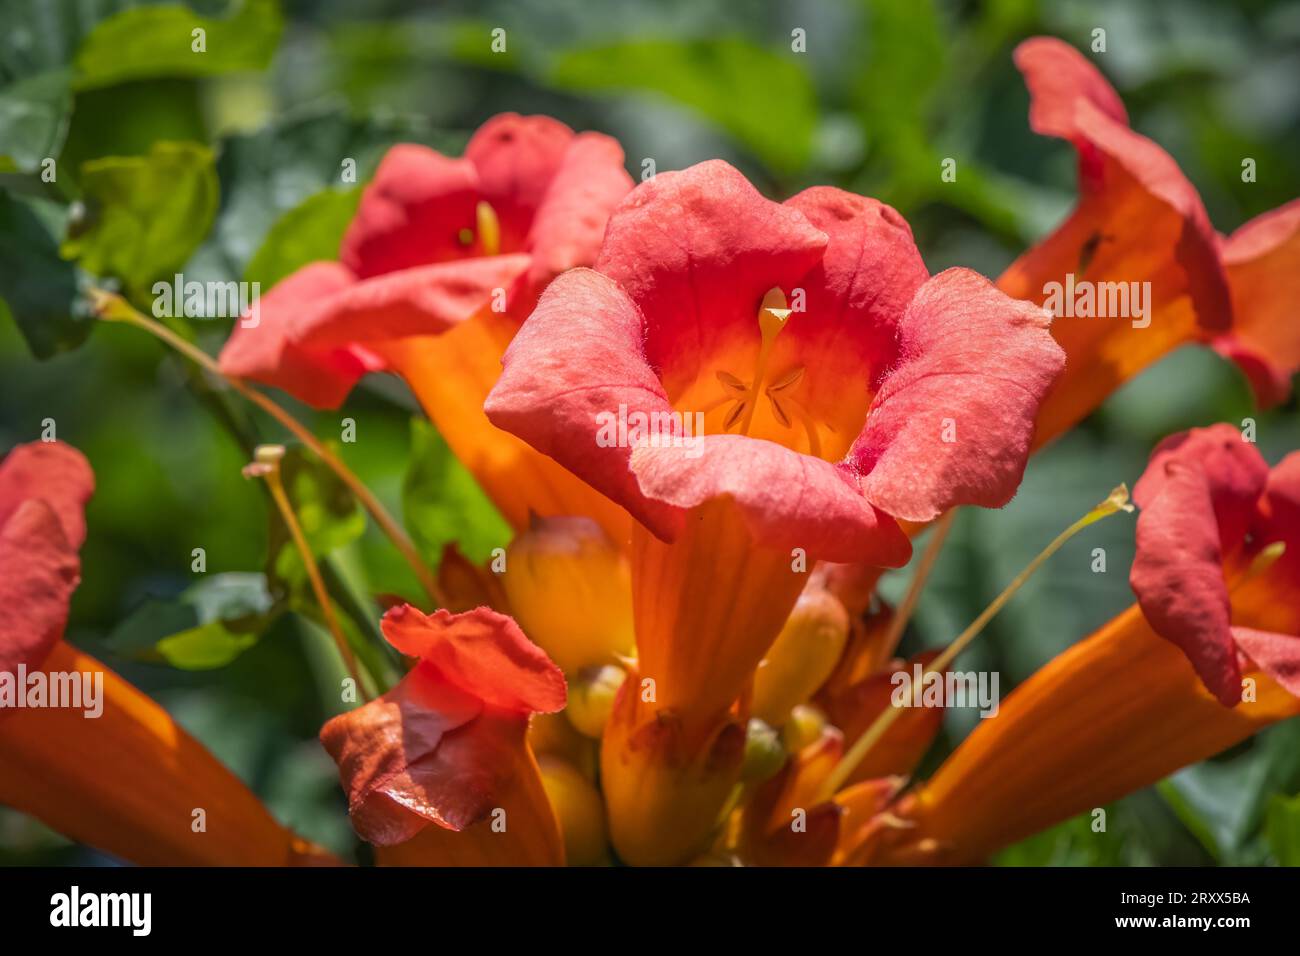 Orange trumpet vine or hummingbird vine flower cluster. Stock Photo